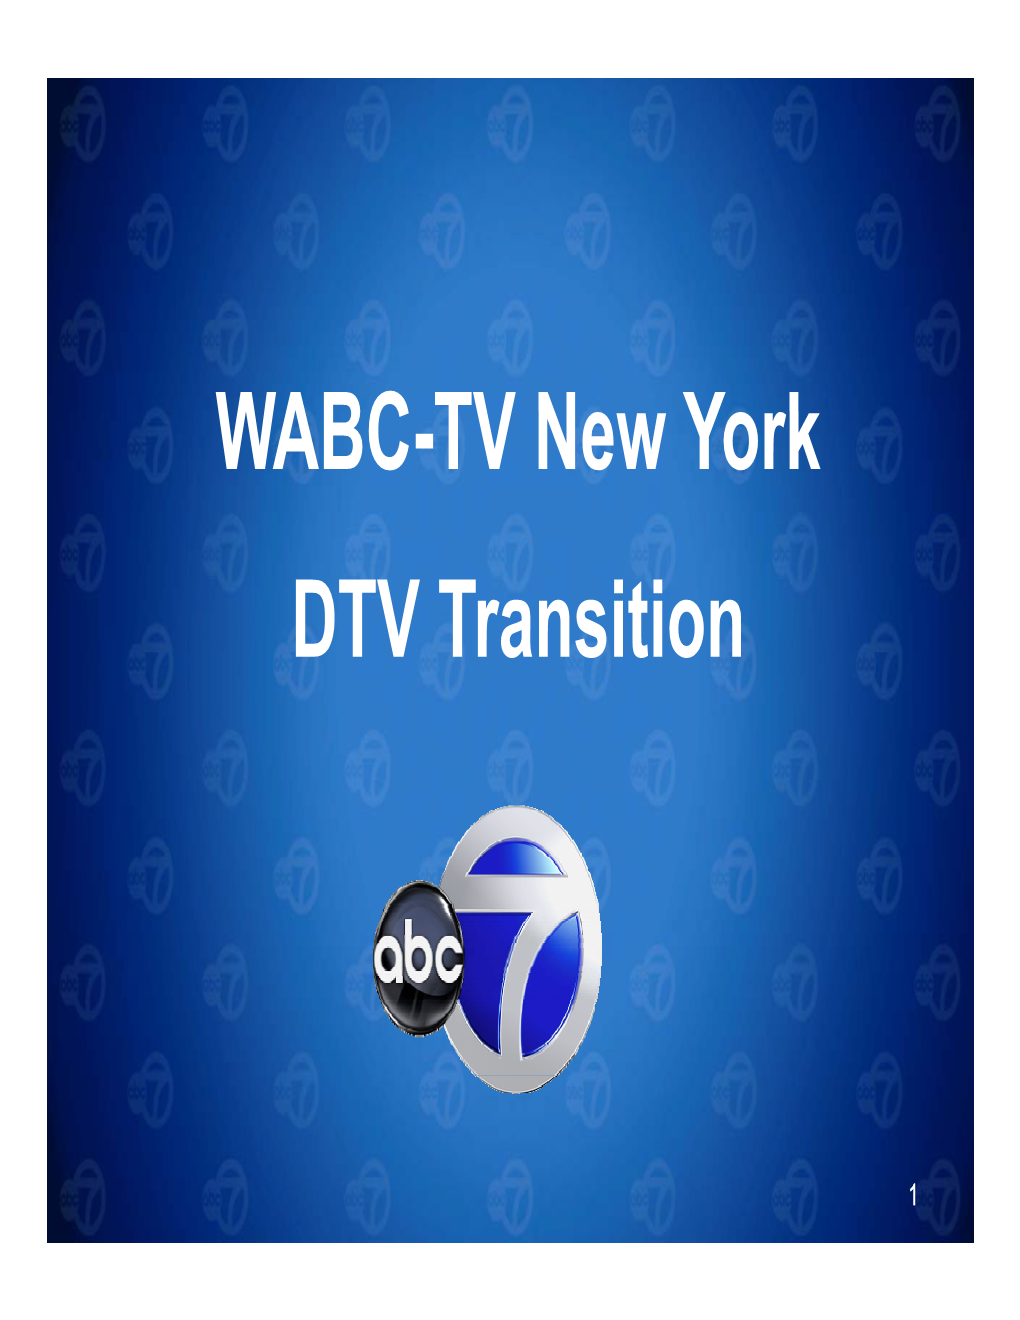 WABC-TV Channel 7